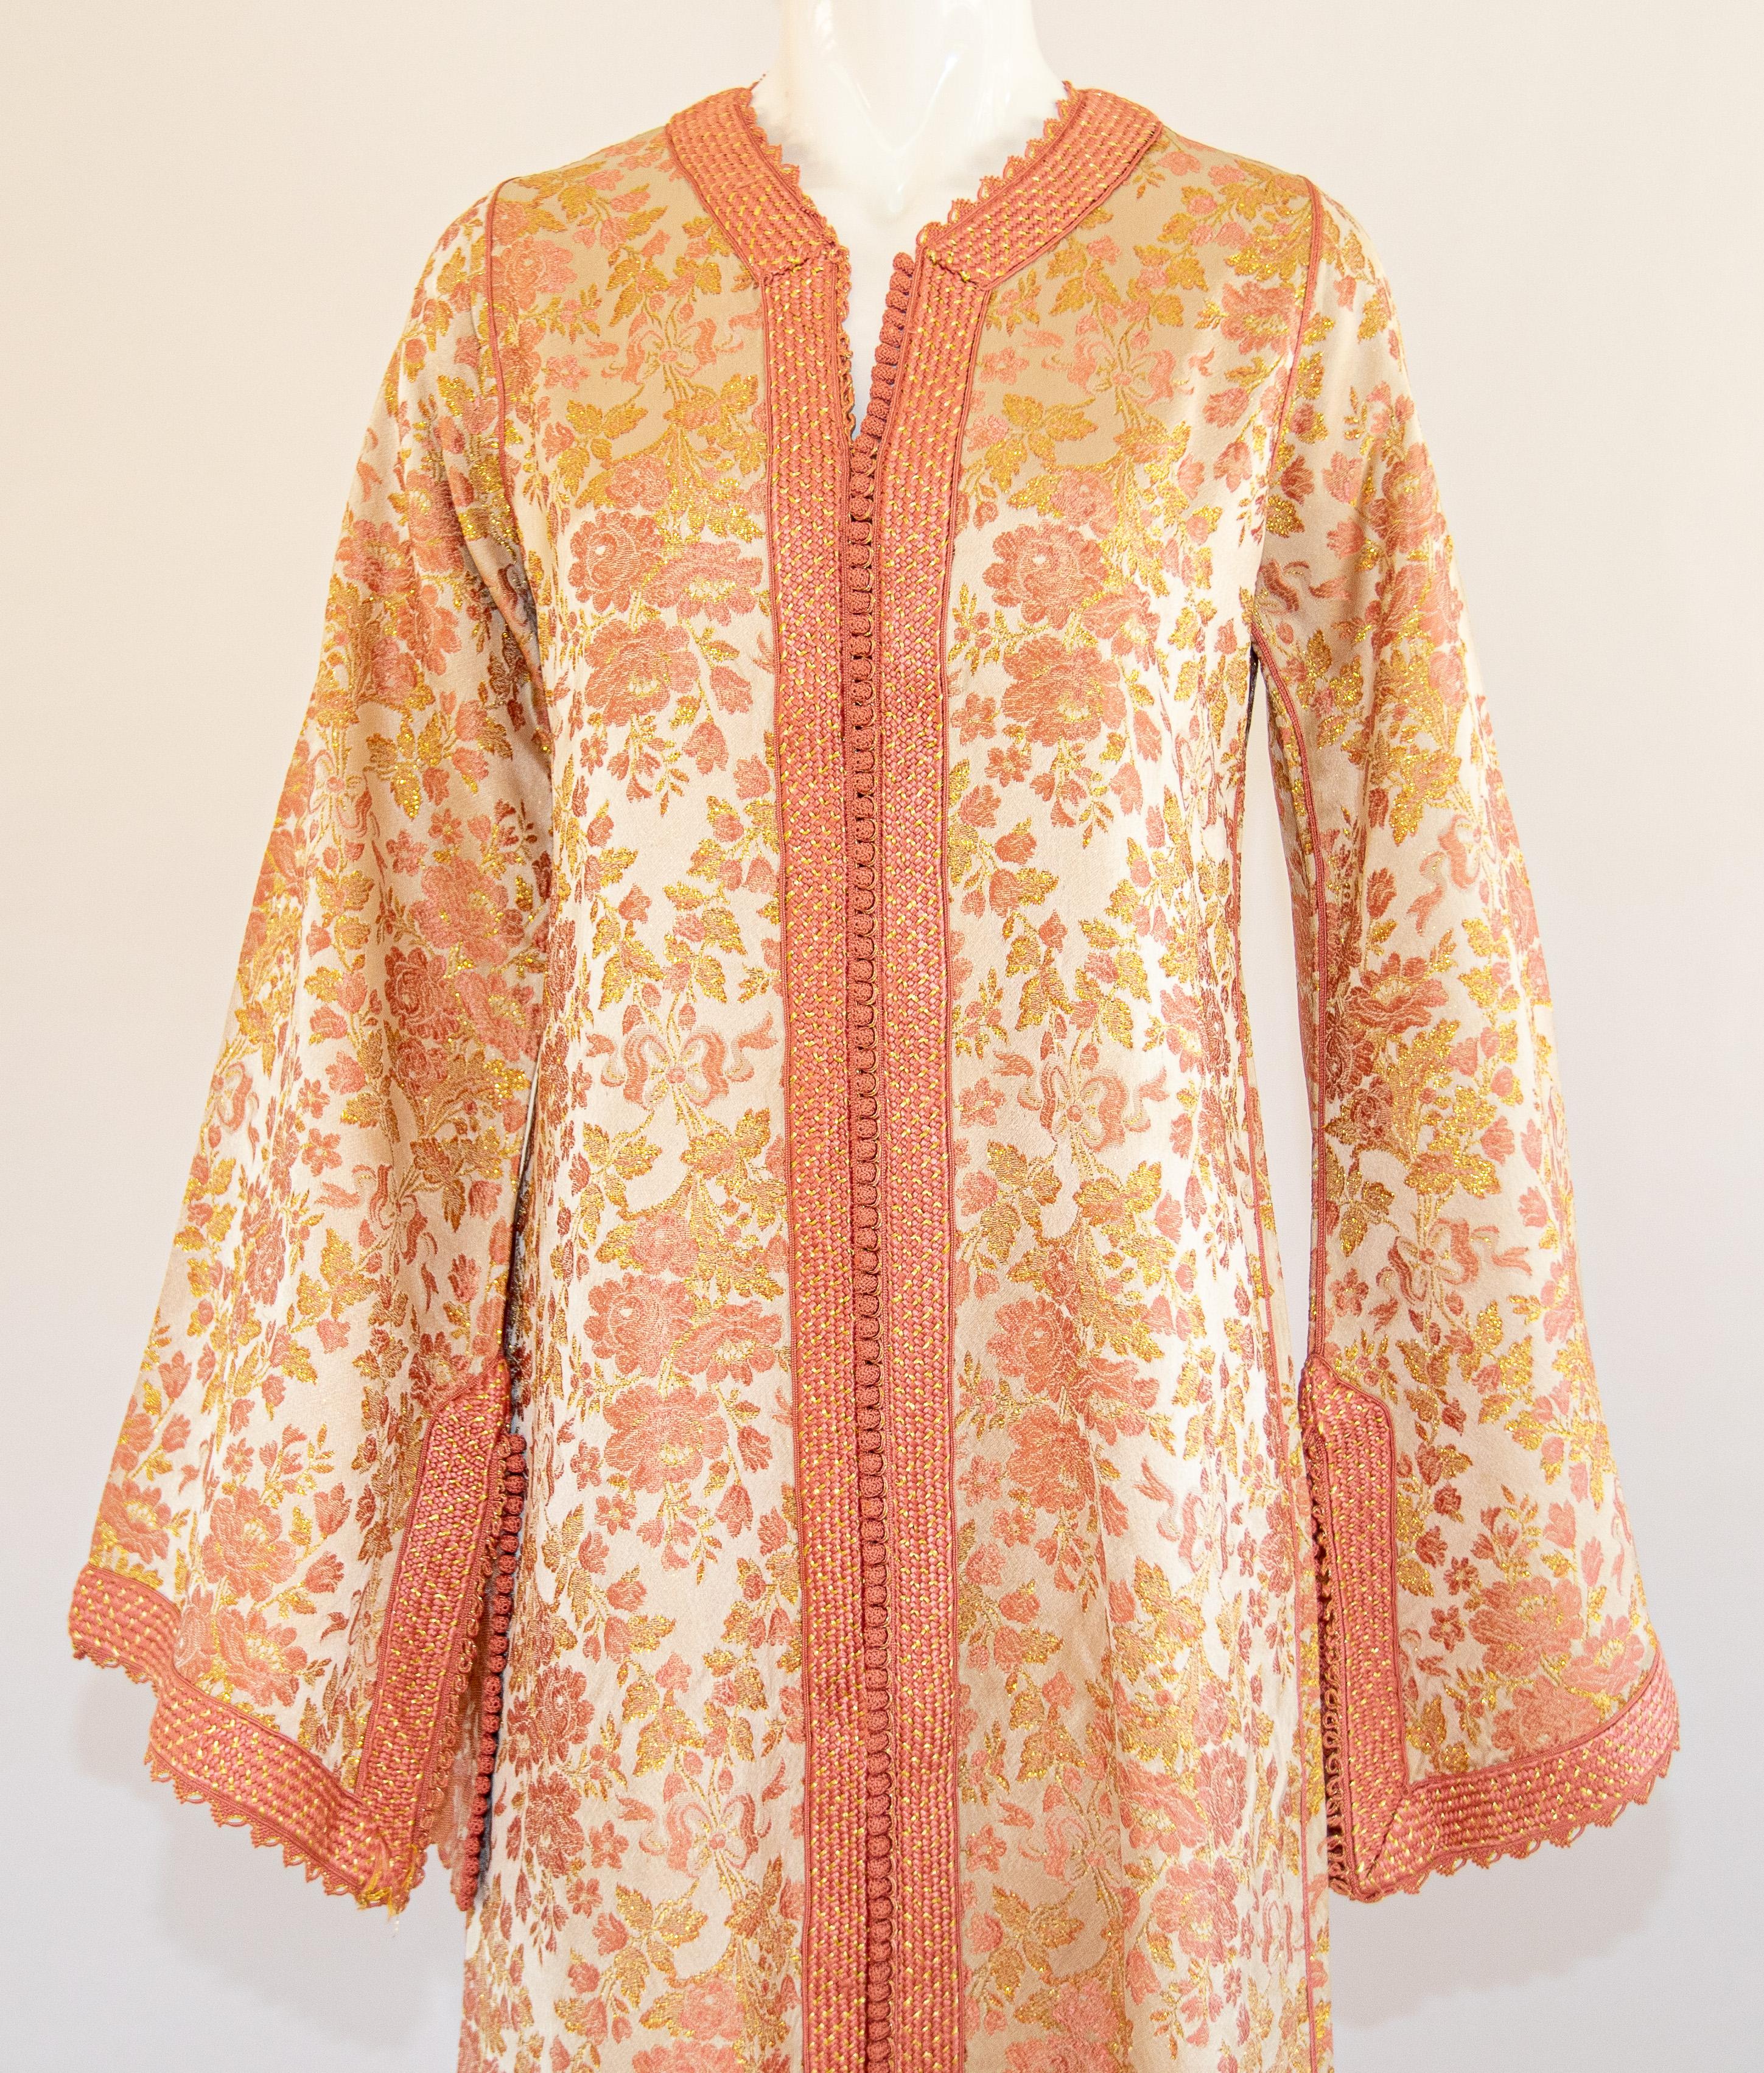 Moroccan Caftan, Blush Pink and Gold Brocade Vintage Kaftan Size Medium 6